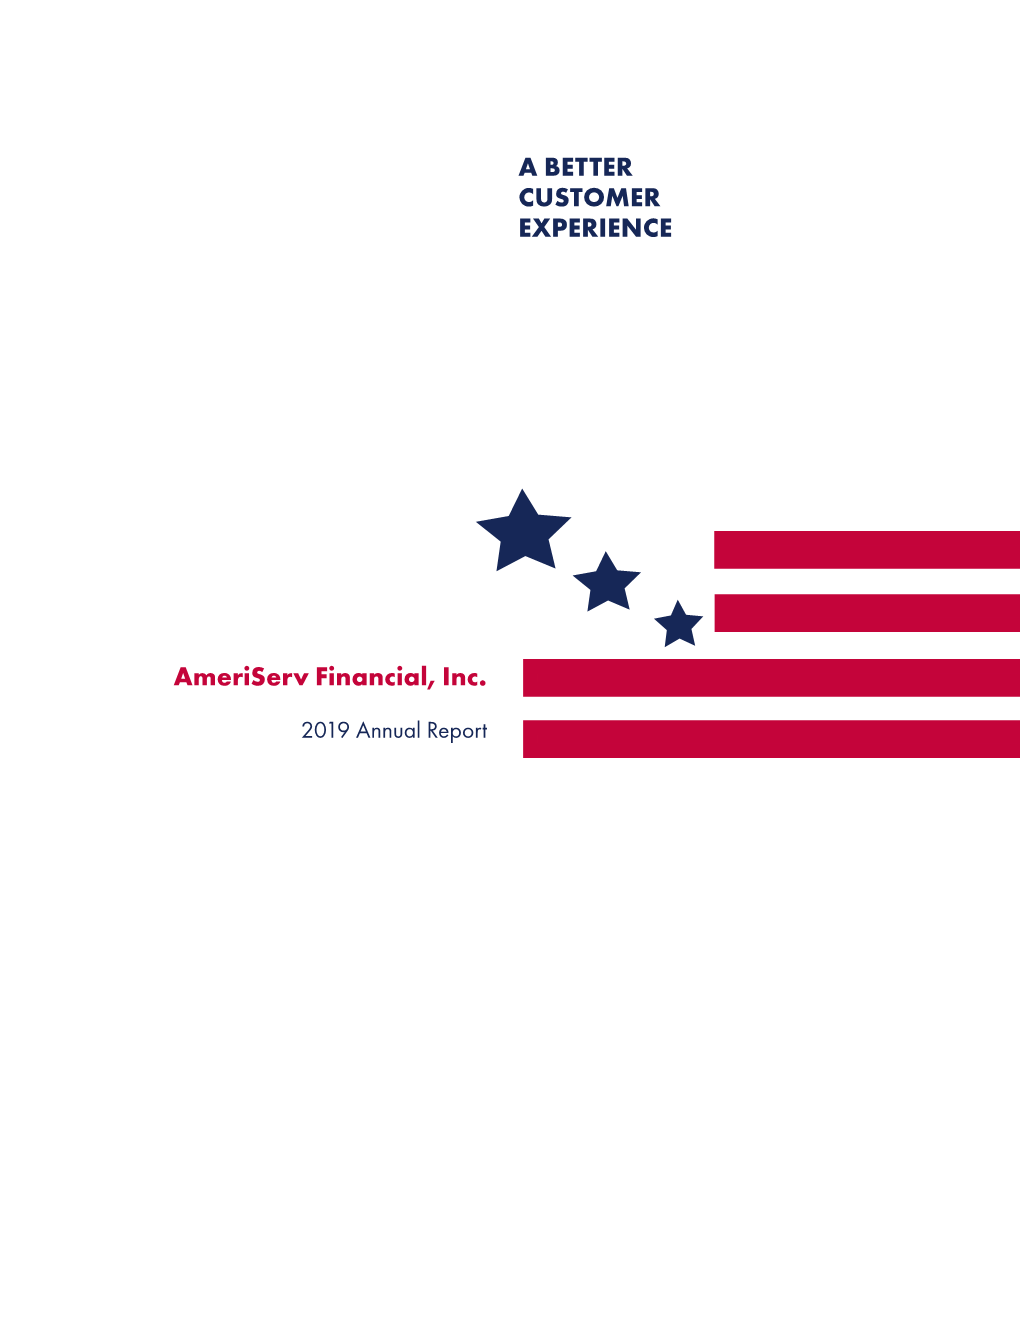 Ameriserv Financial, Inc. a BETTER CUSTOMER EXPERIENCE